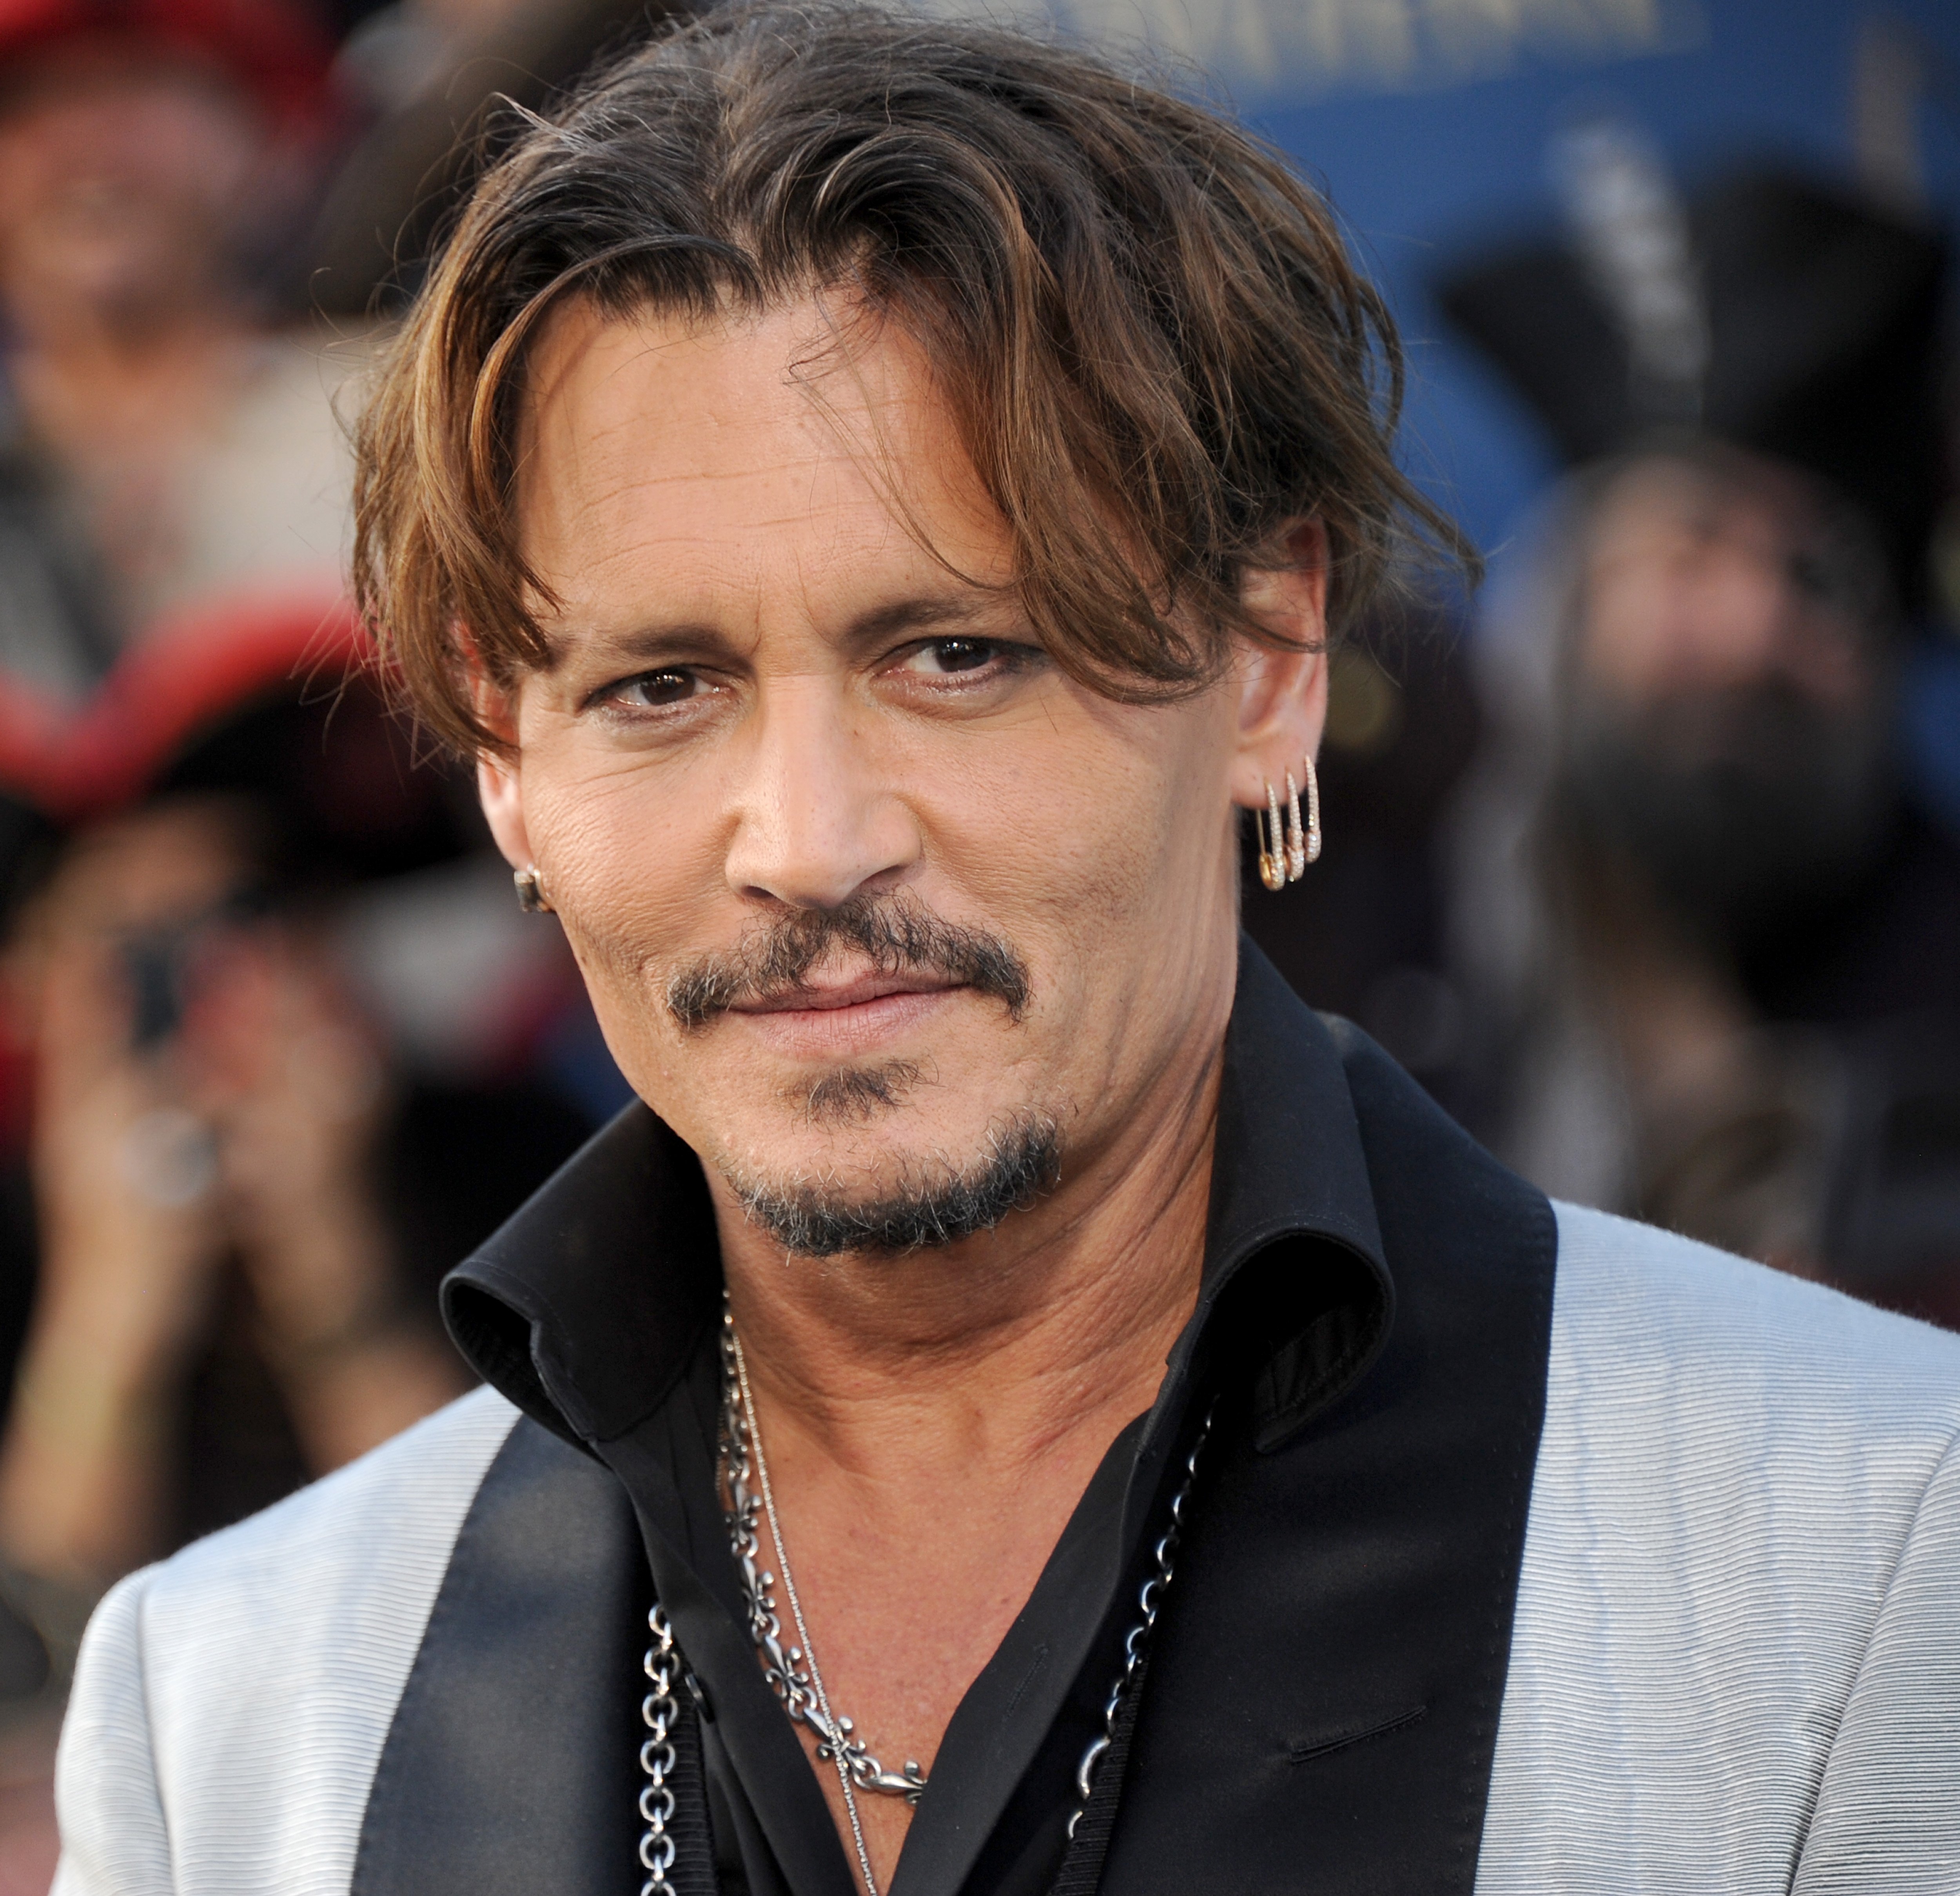 Johnny Depp en el estreno de "Pirates Of The Caribbean: Dead Men Tell No Tales", el 18 de mayo de 2017, en Hollywood, California. | Foto: Getty Images